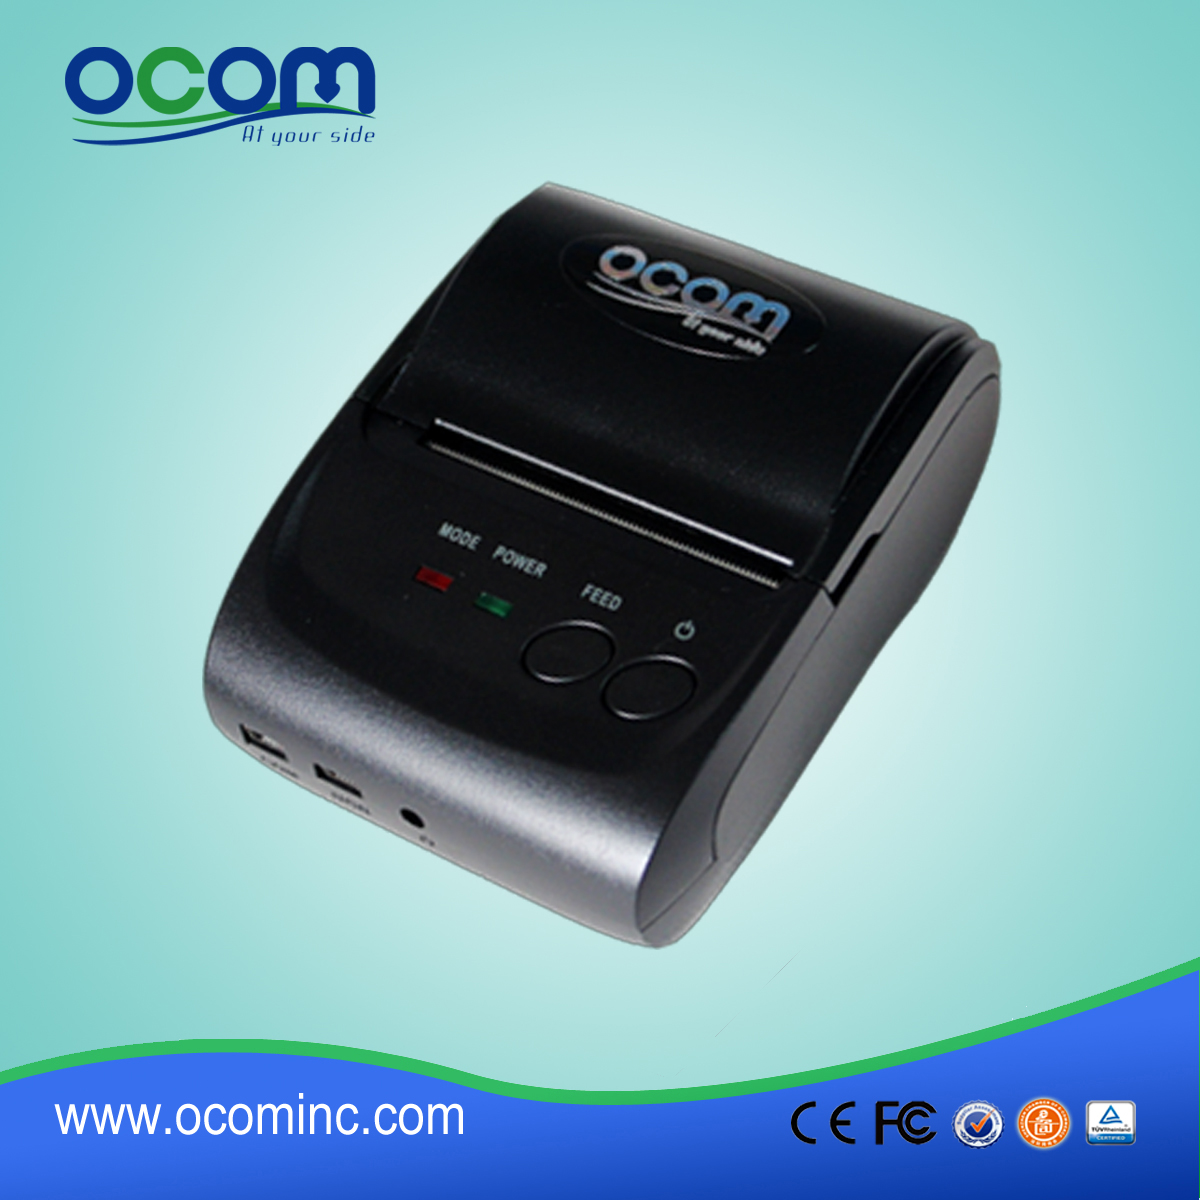 OCPP-M05: 58mm Bluetooth-Drucker Thermo, Mini-Thermo-Belegdrucker